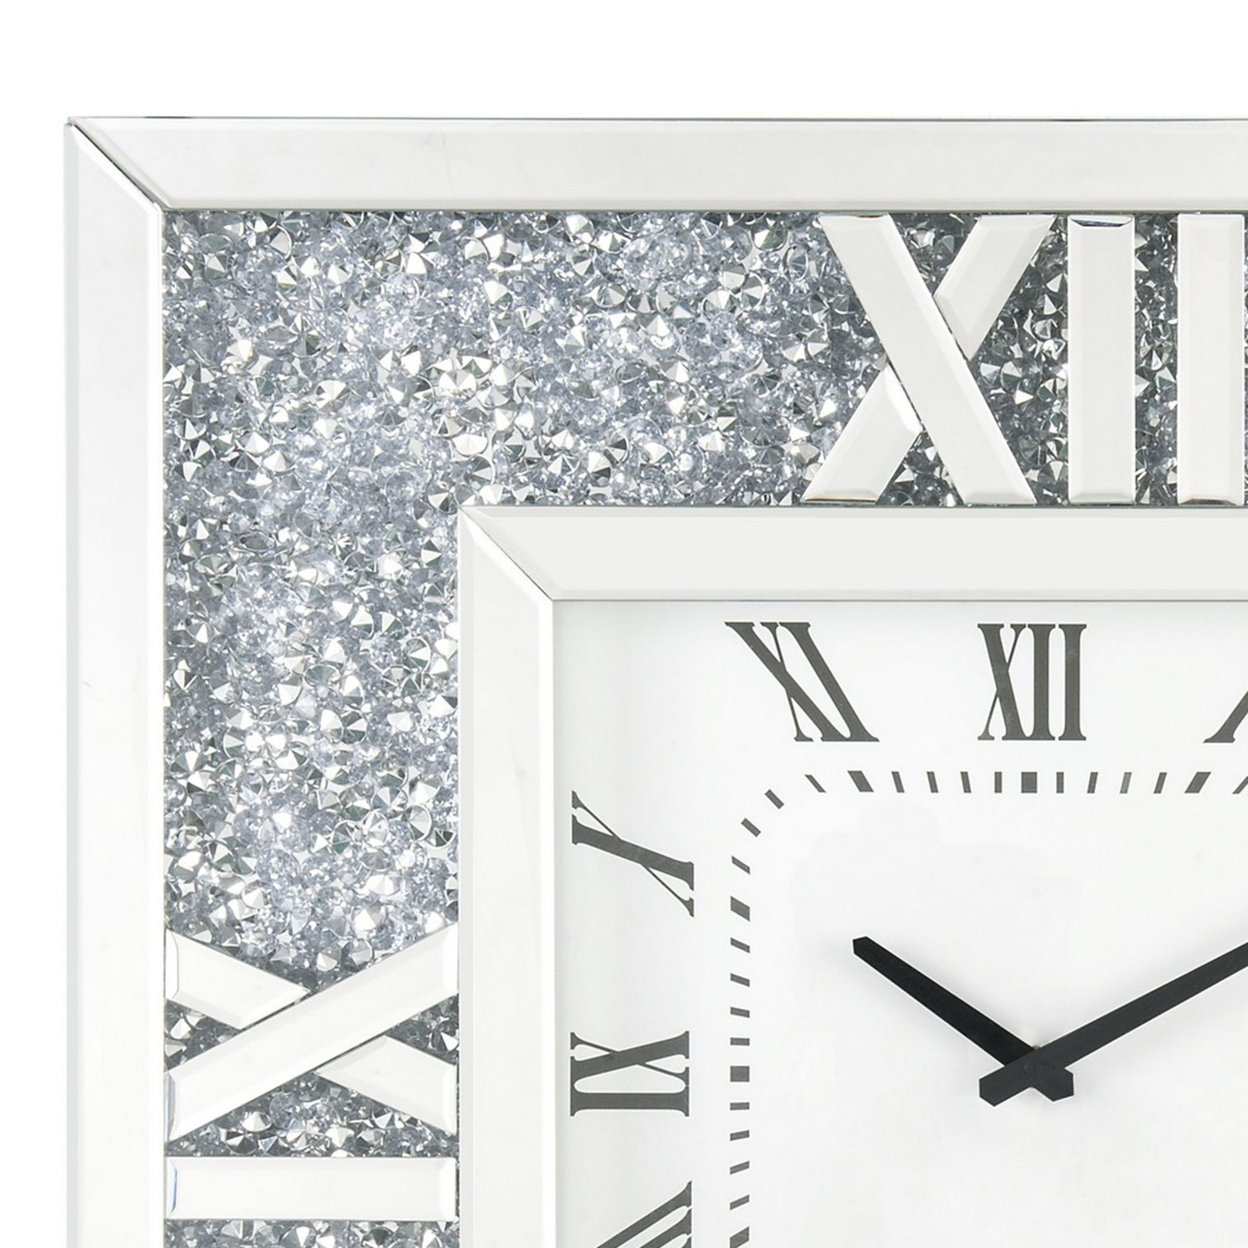 Square Mirror Panel Frame Wall Clock With Faux Diamond, Silver- Saltoro Sherpi